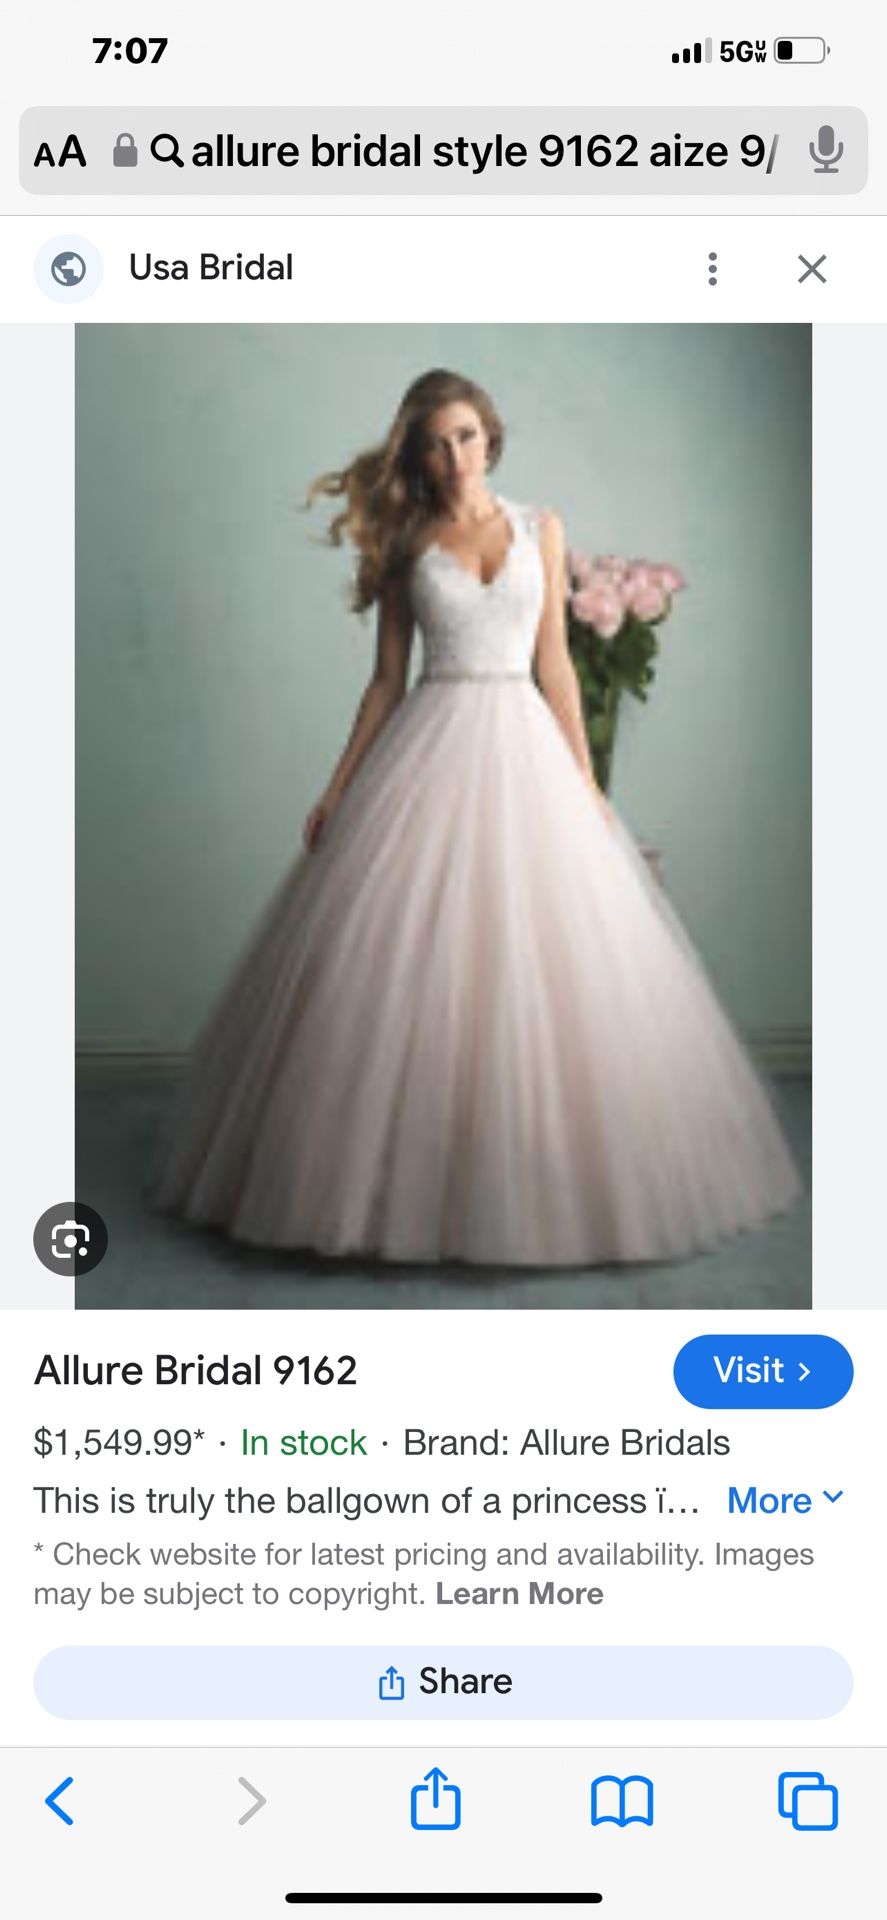 Allure Ivory Wedding Dress